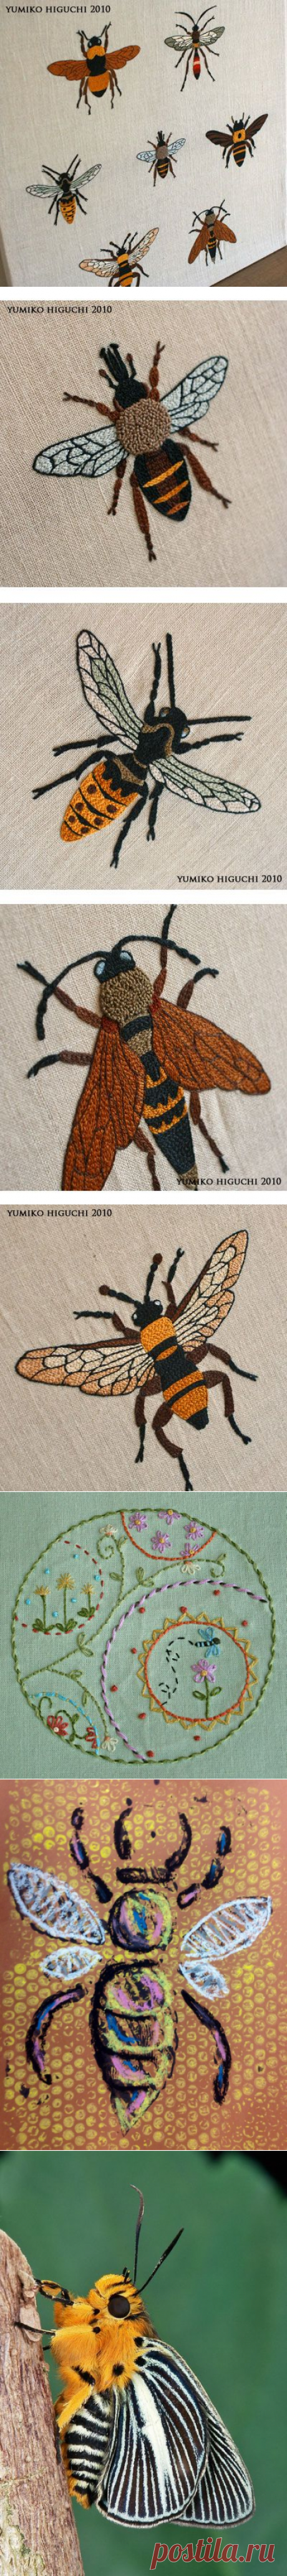 Embroidery - Picmia